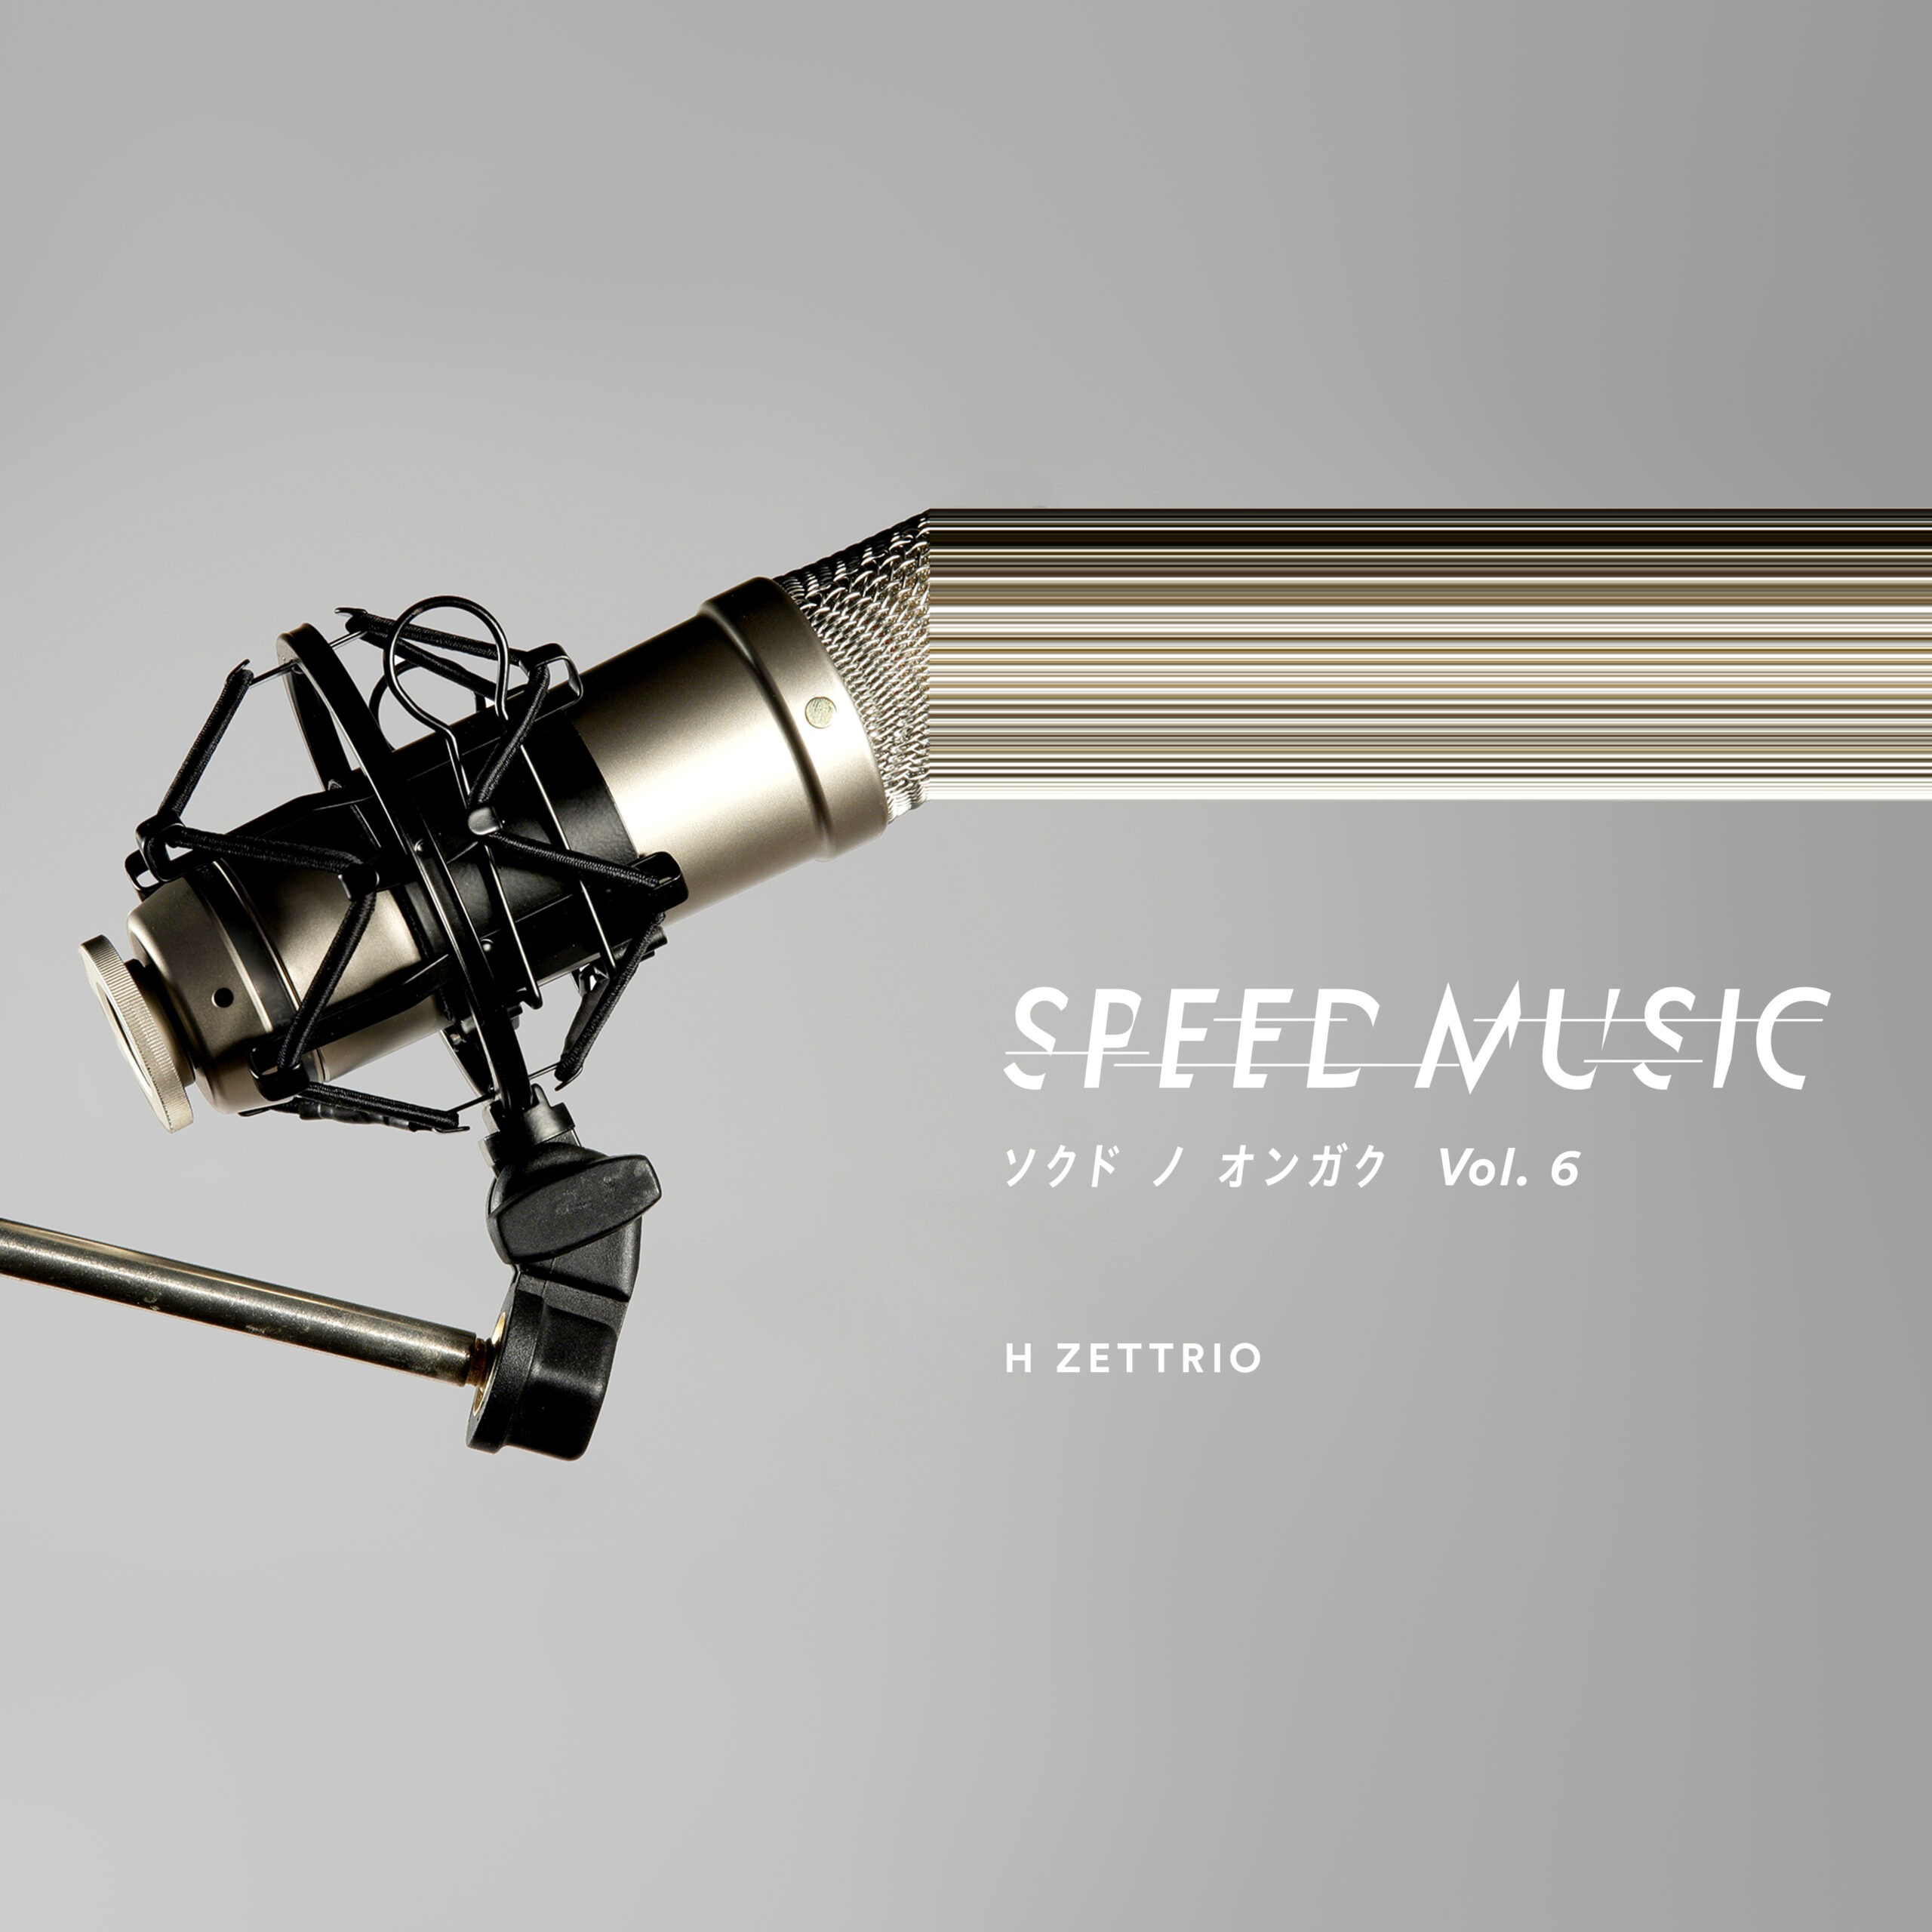 H ZETTRIO｜日本の名曲カバー・アルバム第6弾『SPEED MUSIC ソクドノ 